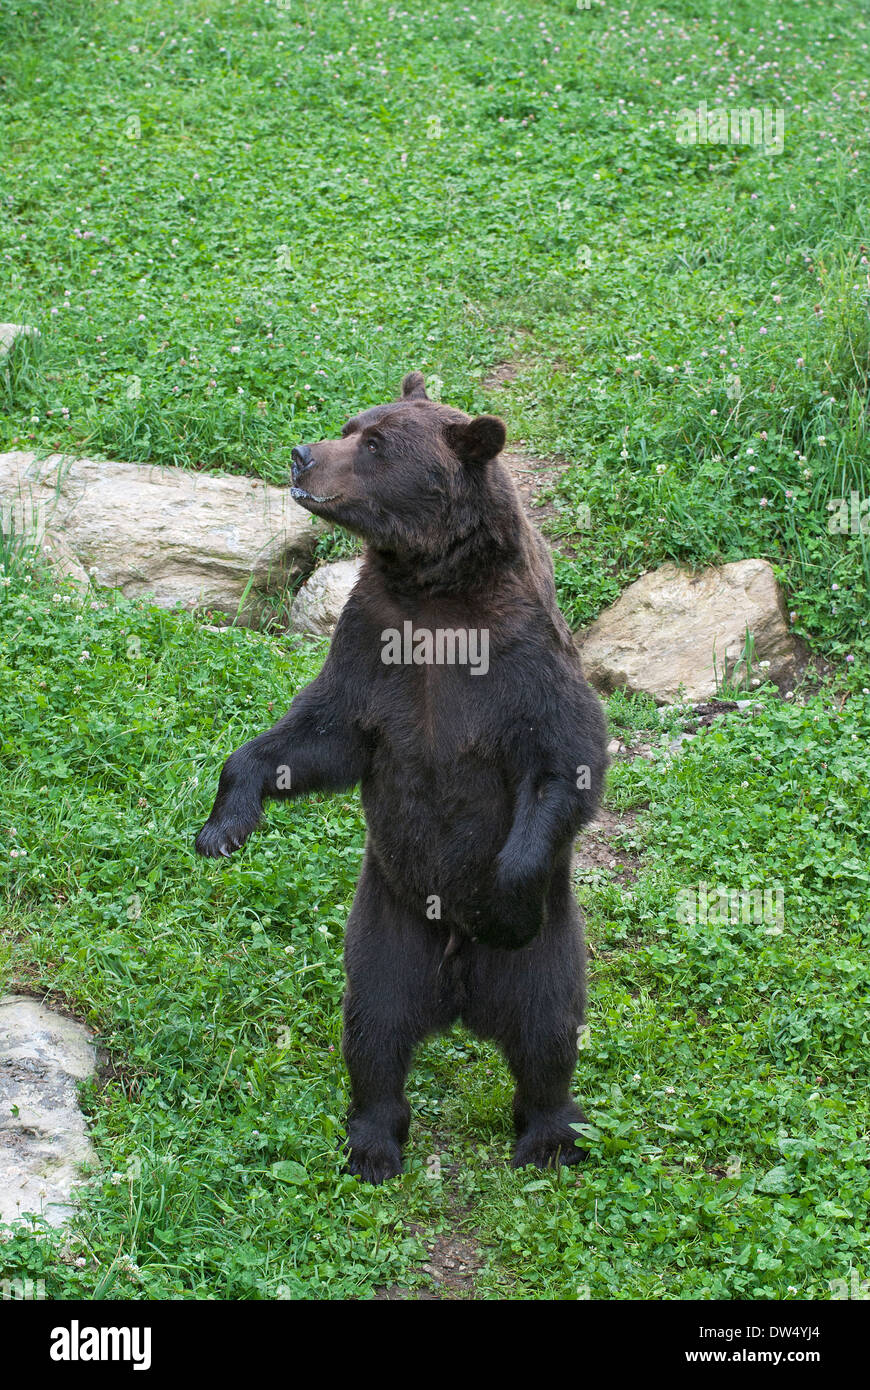 Brown bear (Ursus arctos) standing in wildlife area,  Osservatorio Eco-Faunistico Alpino, Aprica, Lombardy, Italy Stock Photo